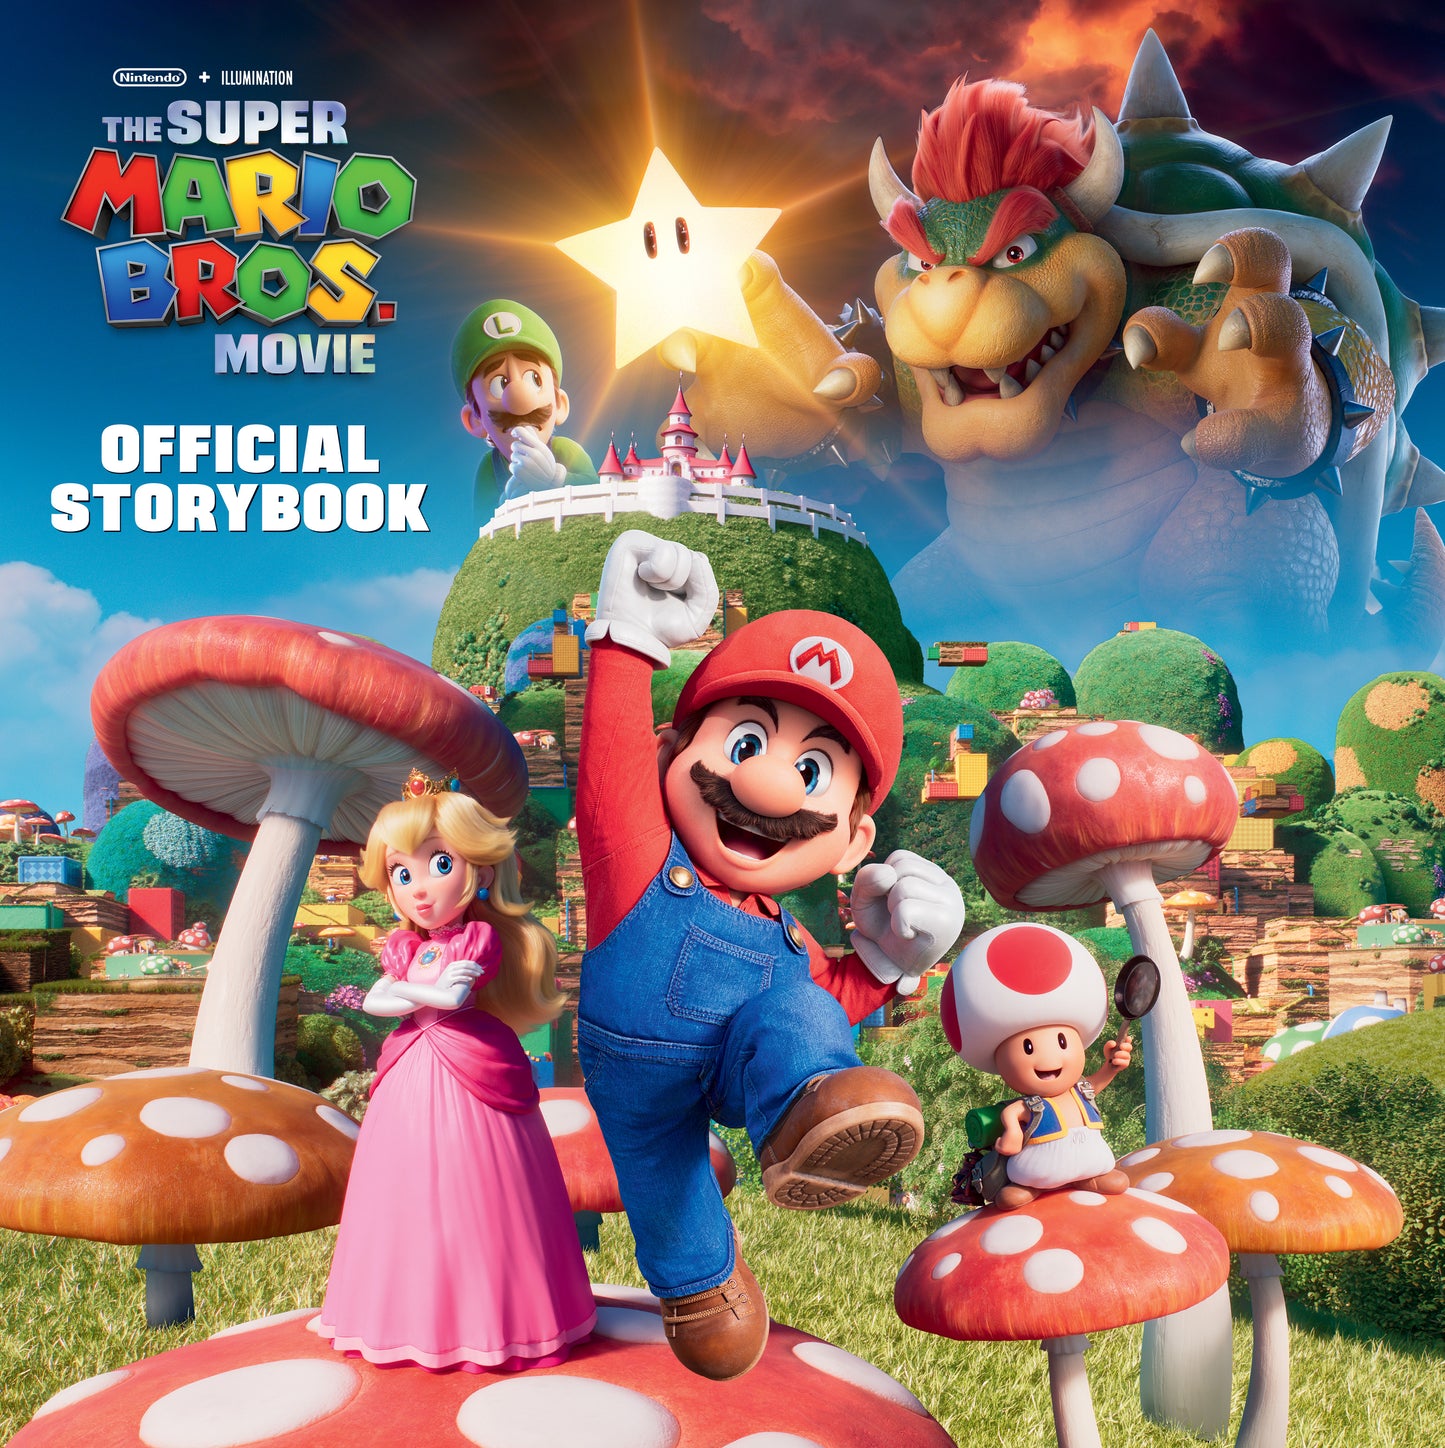 Nintendo® and Illumination present The Super Mario Bros. Movie Official Storybook